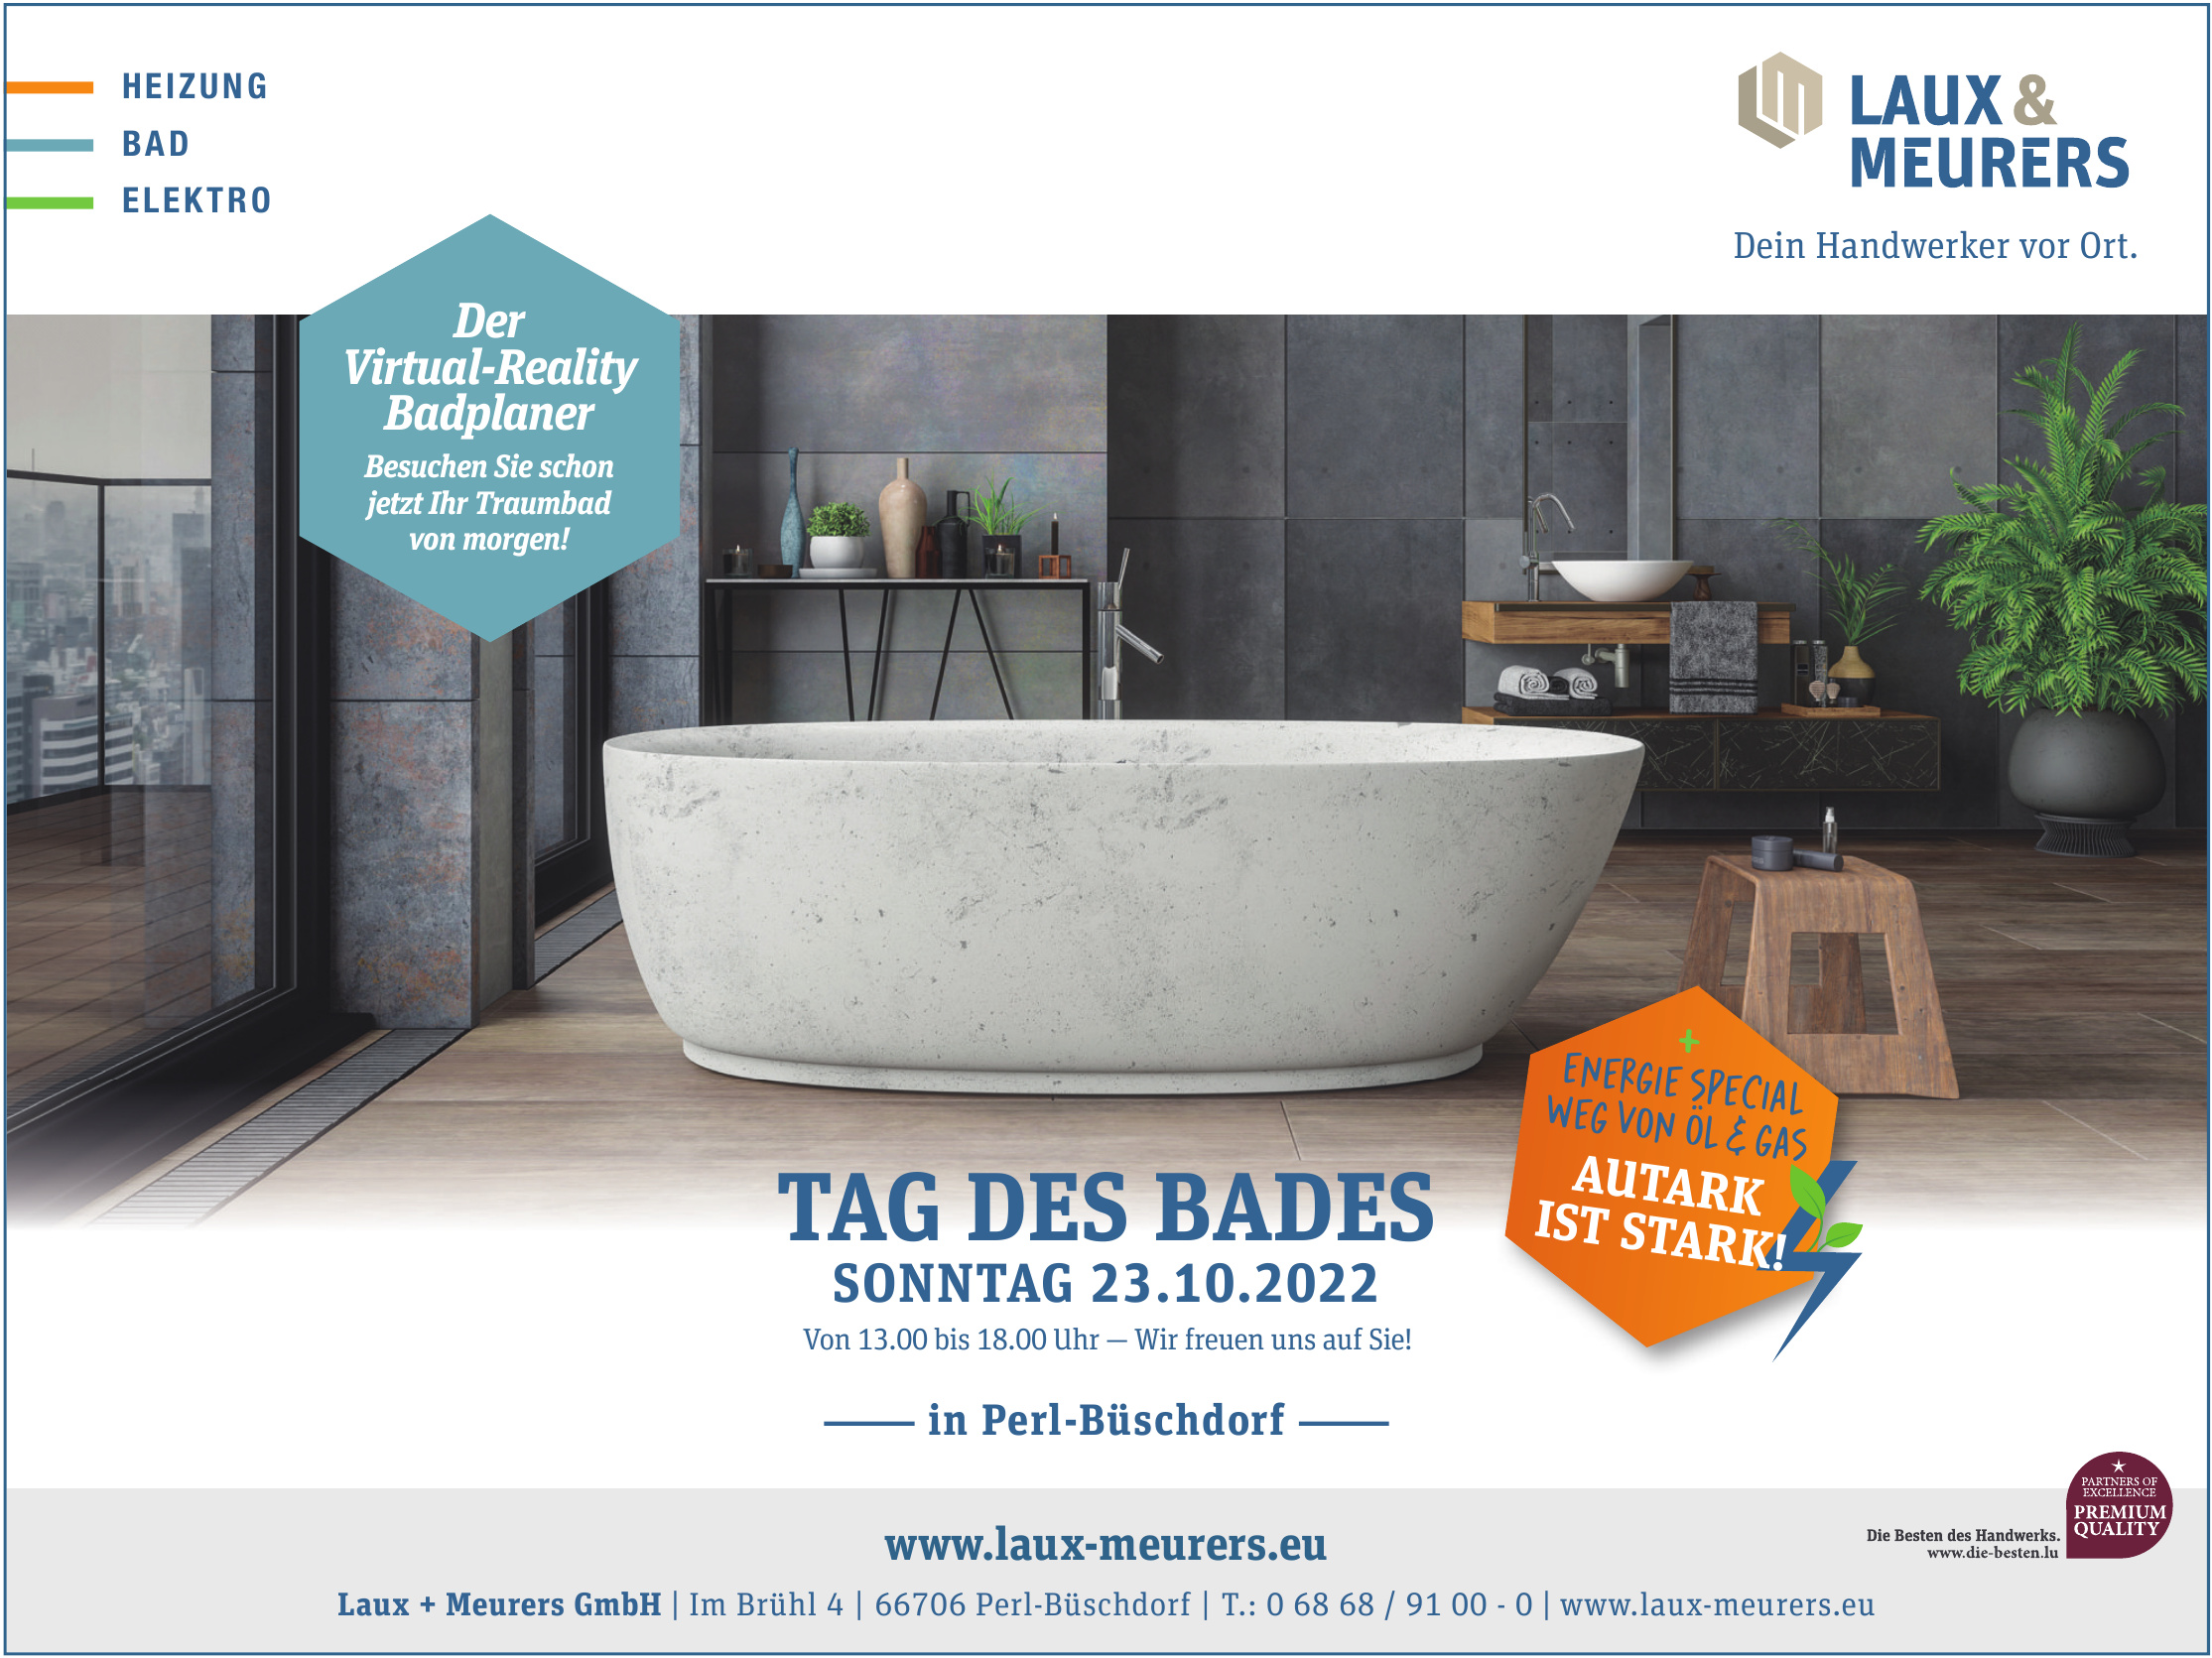 Laux & Meuers GmbH